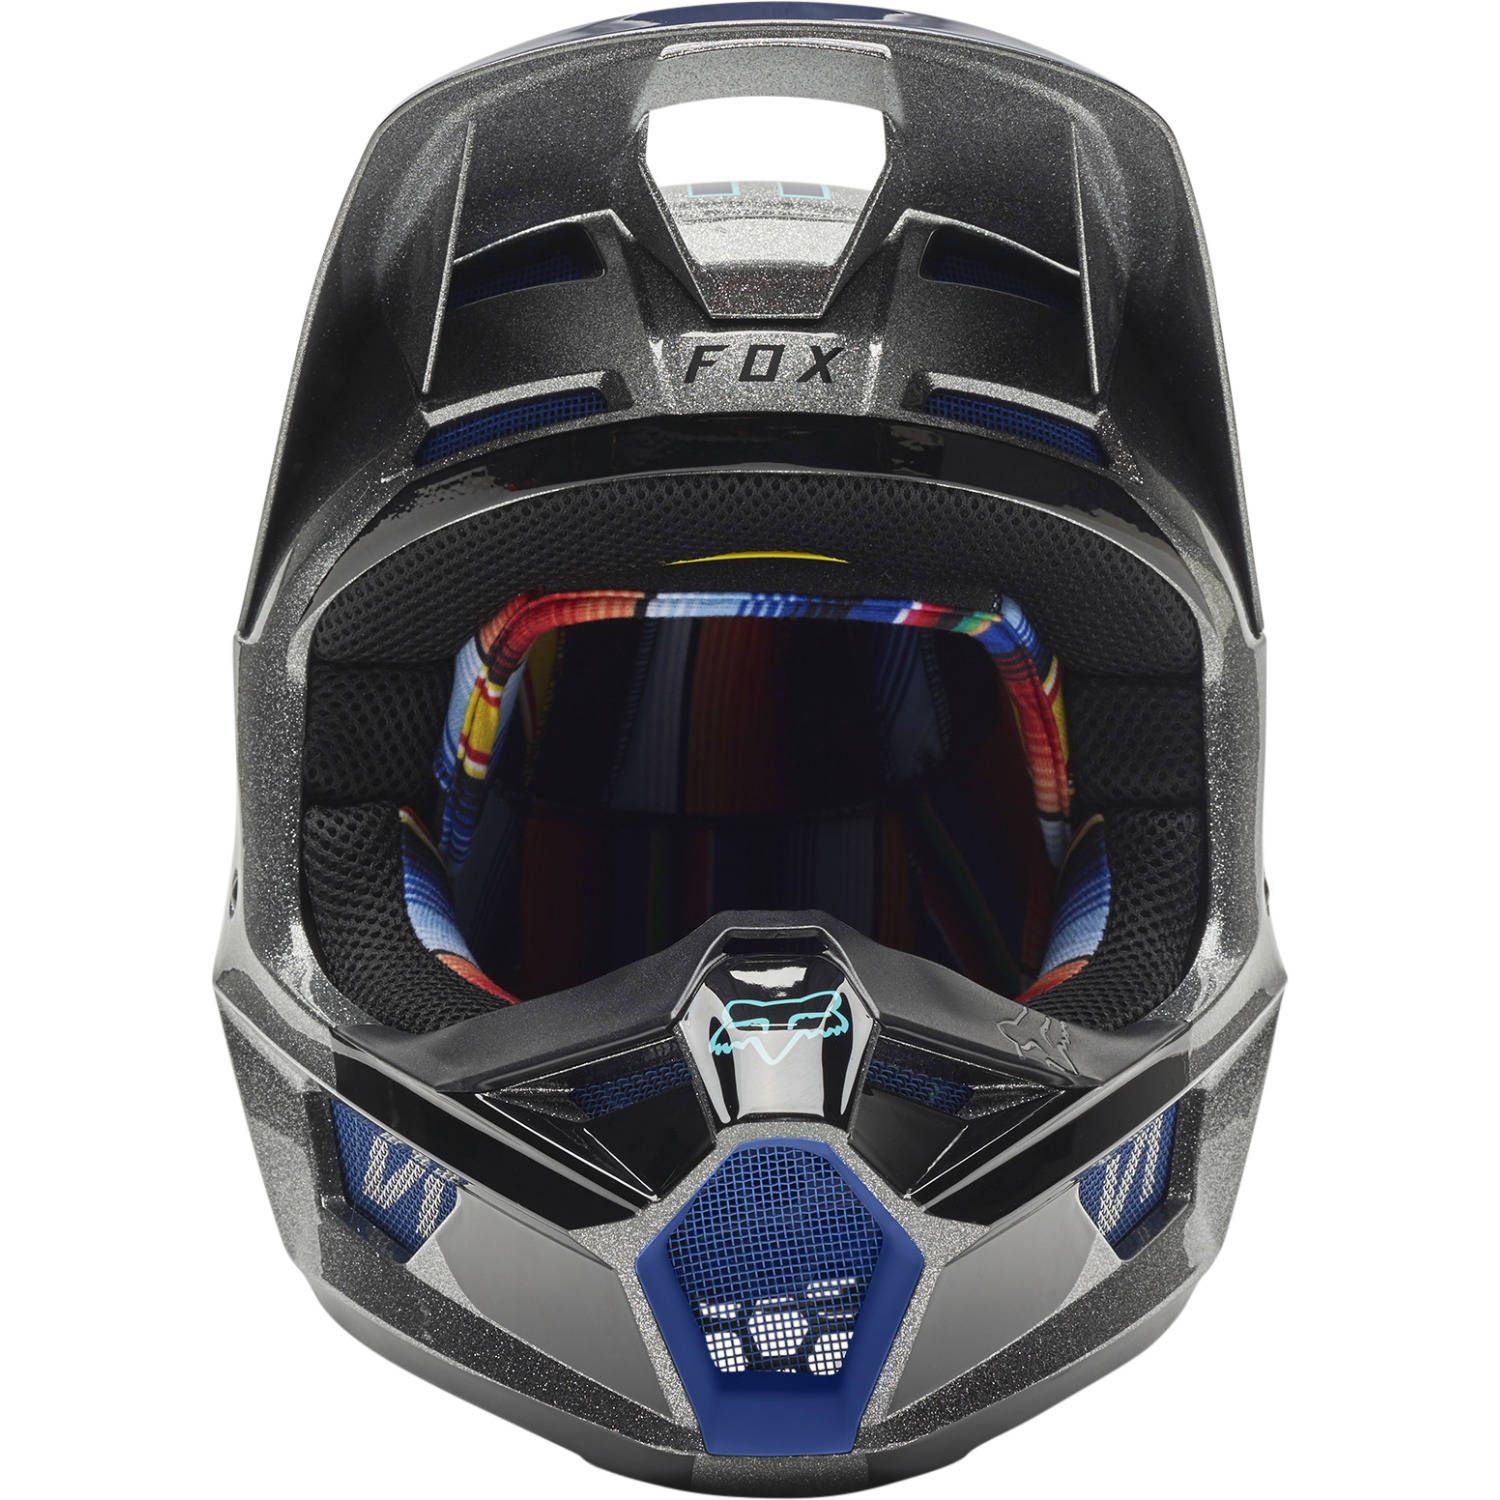 Fox Racing V1 Cntro LE Helmet - Ottawa Goodtime Centre 